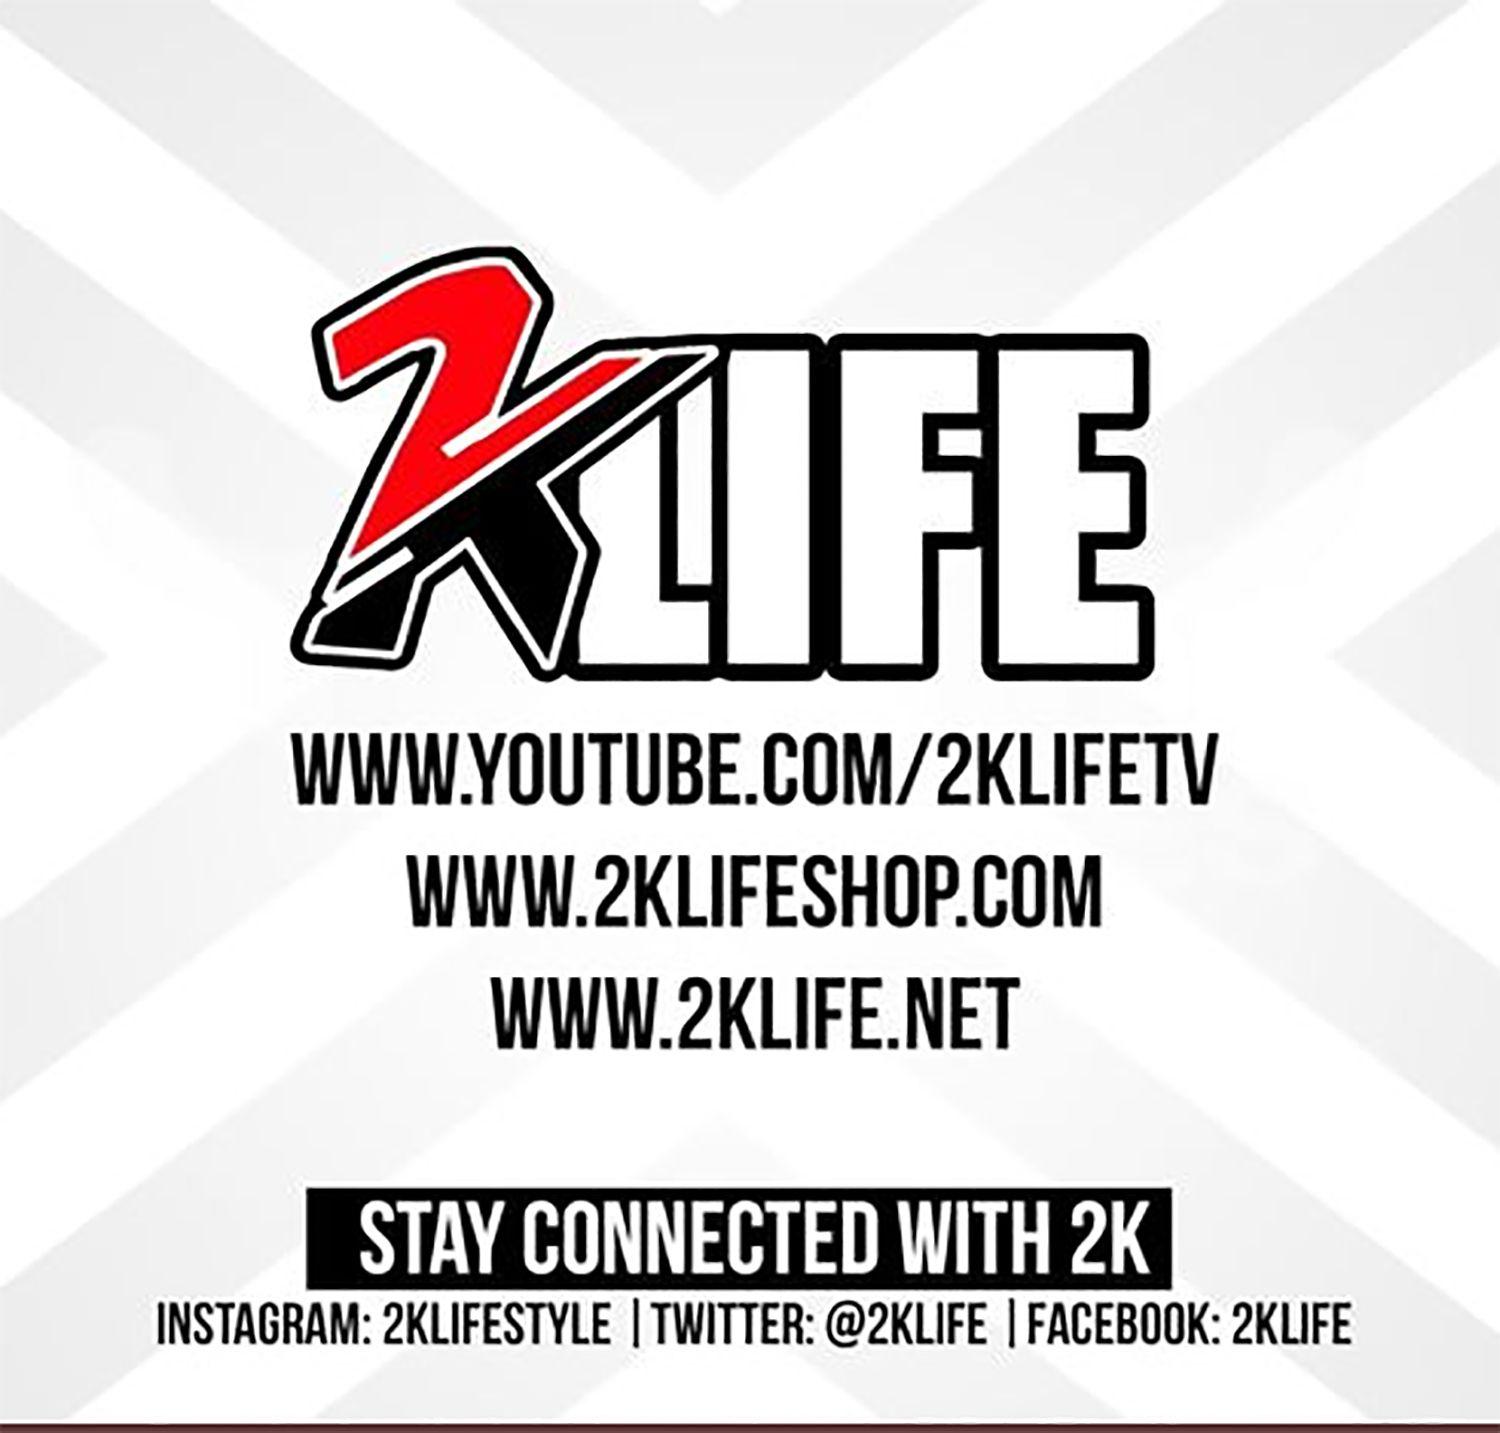 Savage Life Logo - pod. fanatic. Podcast: 2KLIFE Network. Episode: The Savage Life